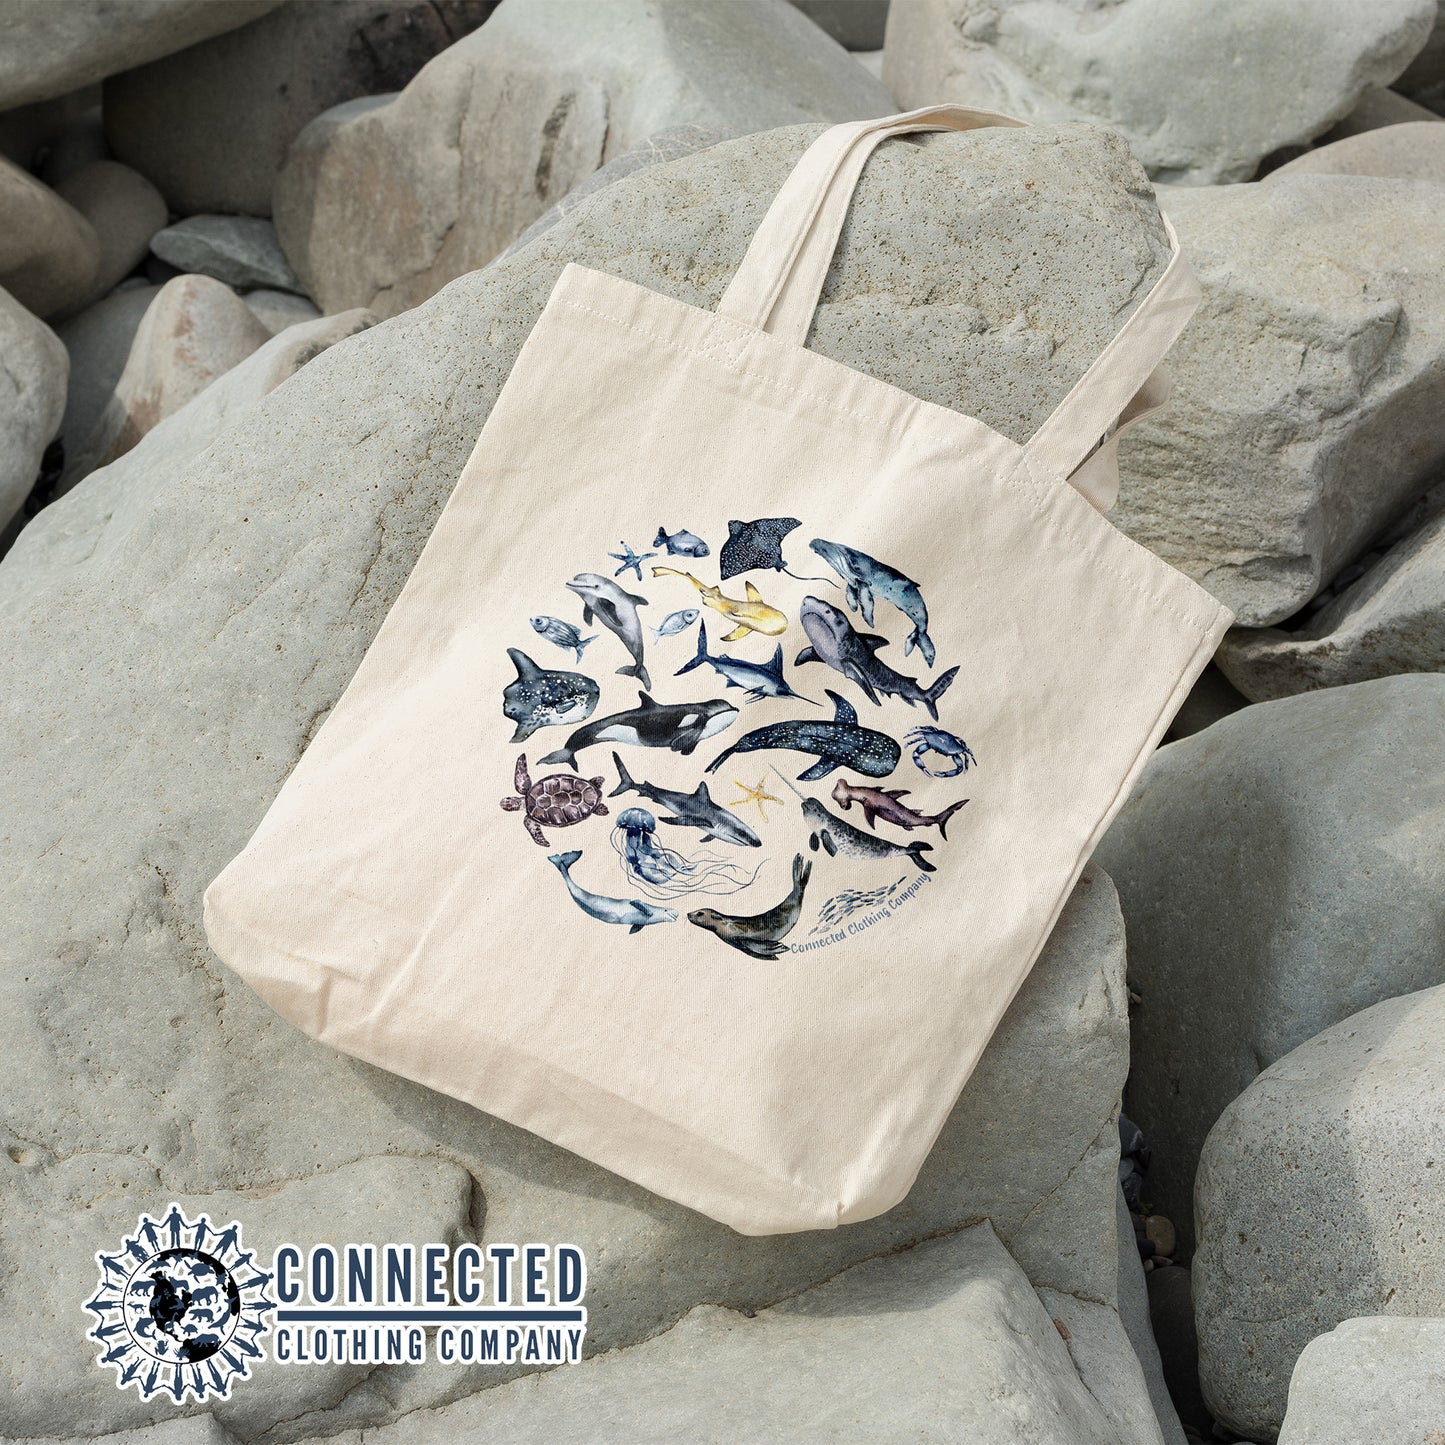 Blue Ocean Creatures Tote Bag - sweetsherriloudesigns - 10% donated to ocean conservation